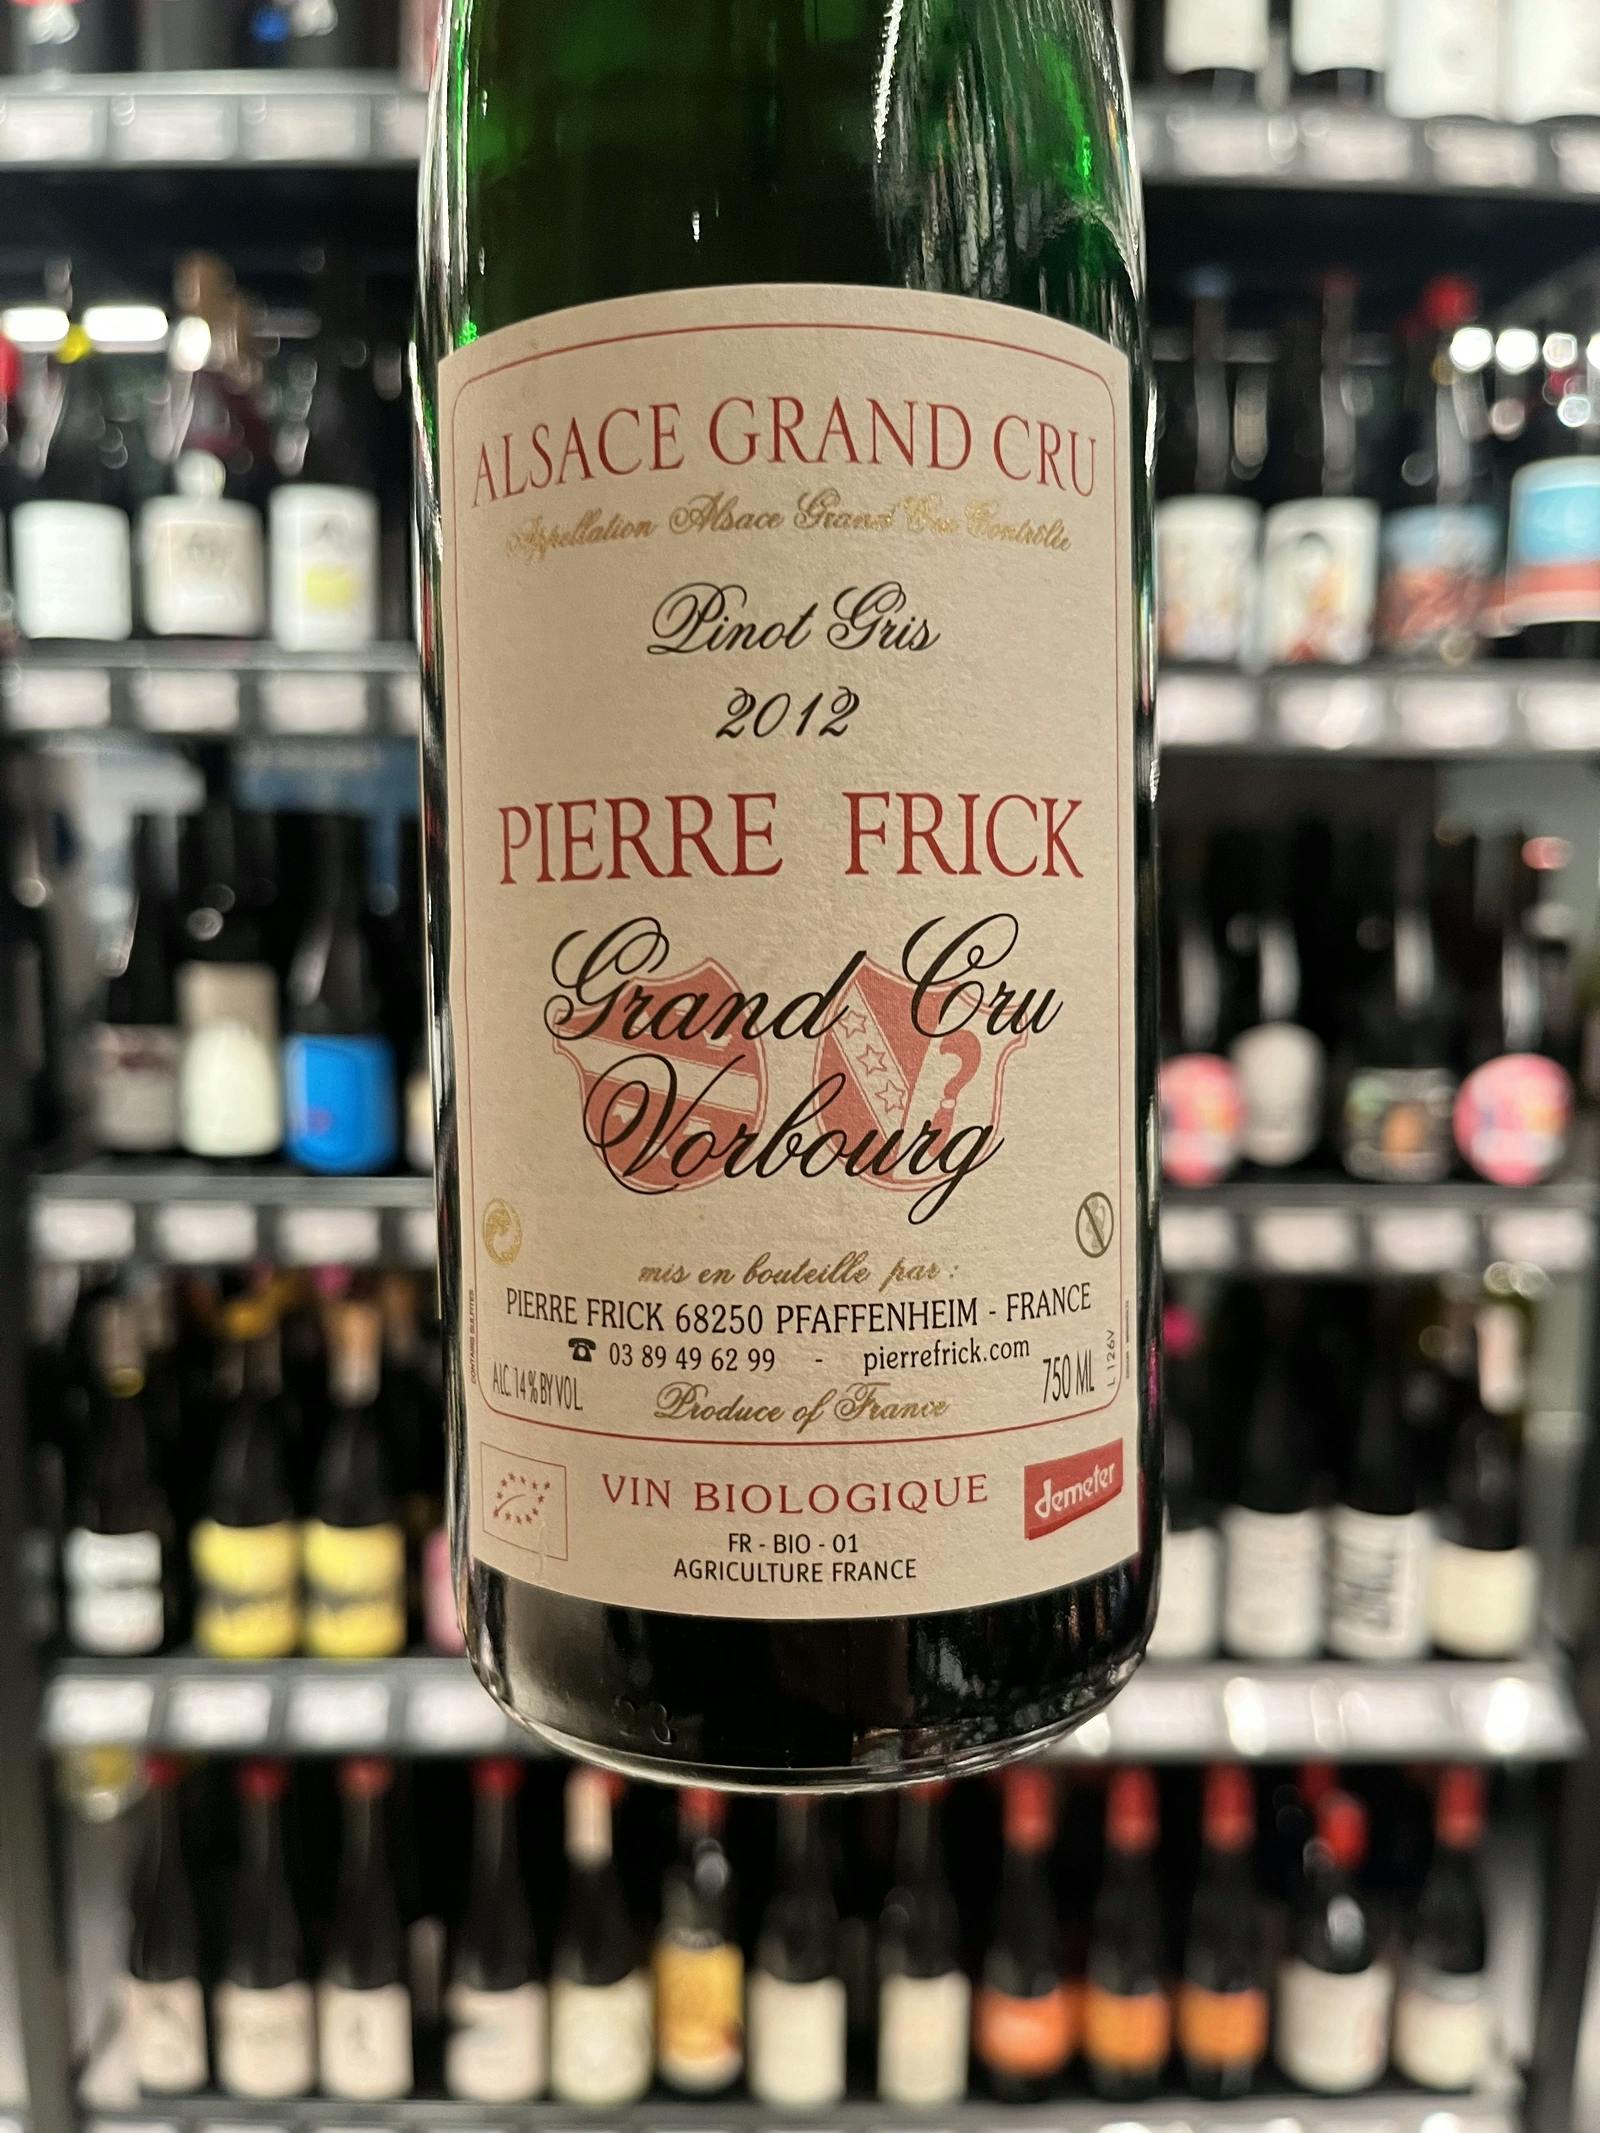 Pierre Frick Grand Cru Vorbourg Pinot Gris 2012